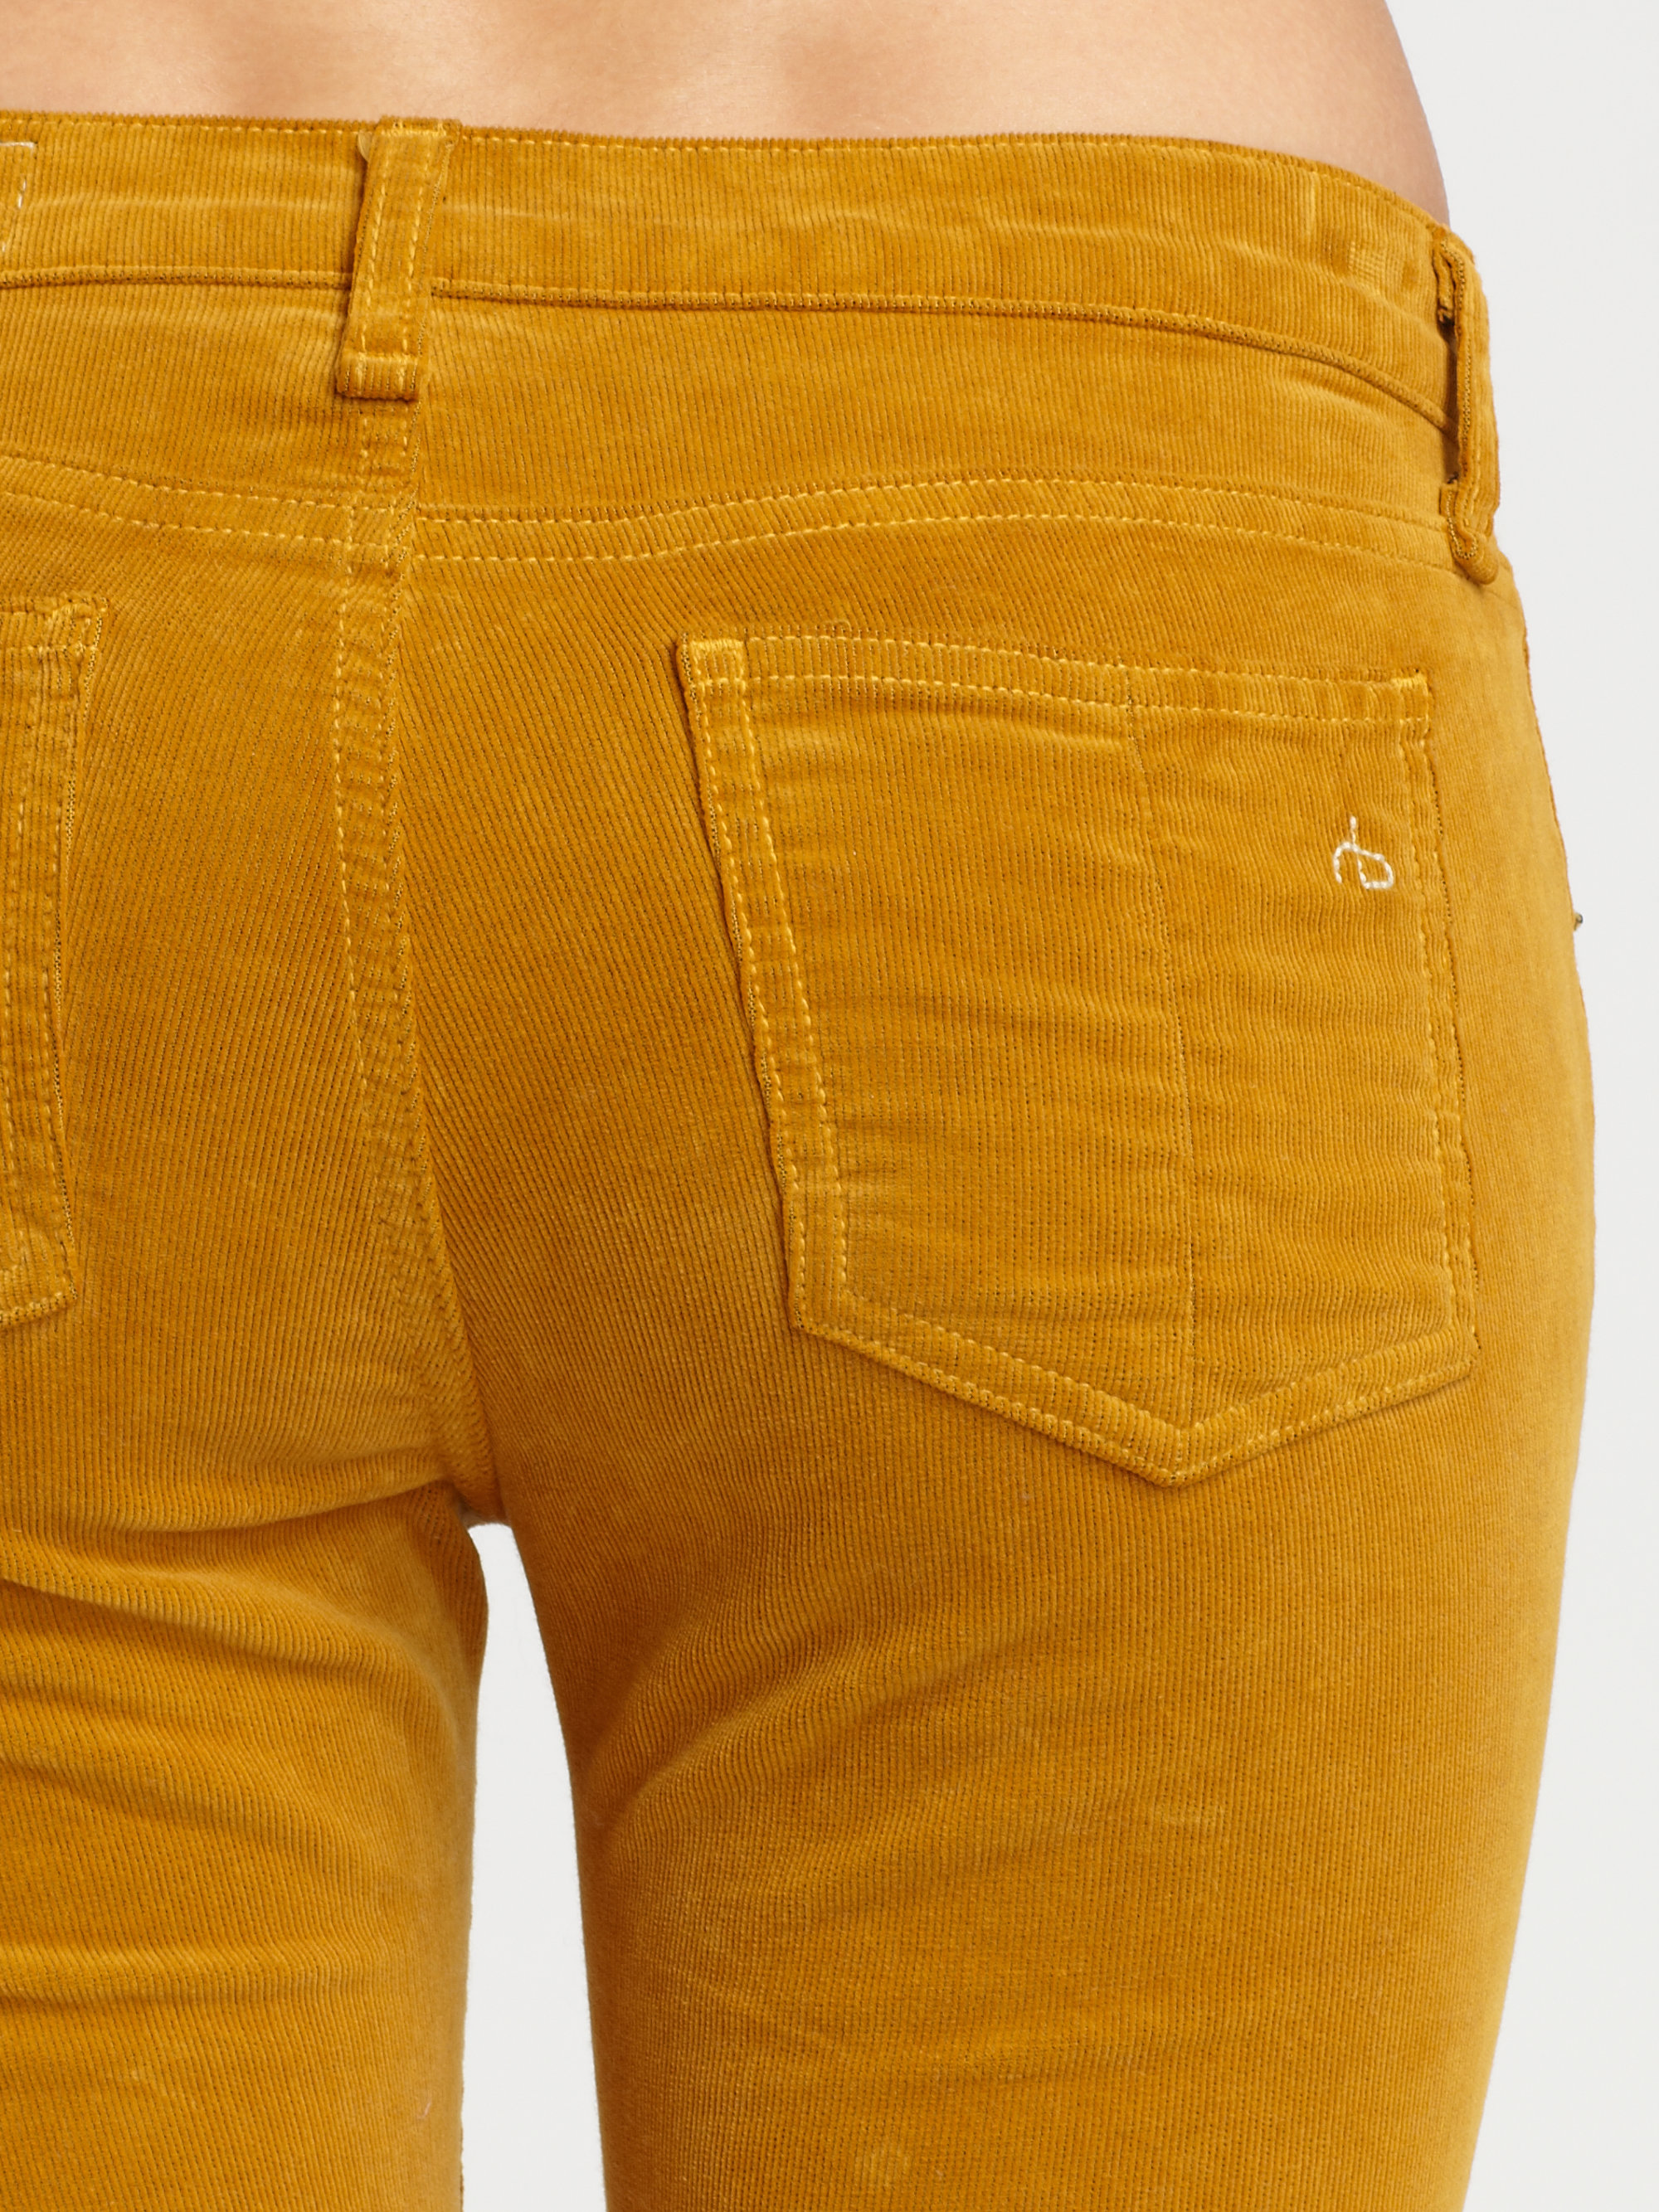 Rag & bone The Skinny Corduroy Jeans in Yellow | Lyst